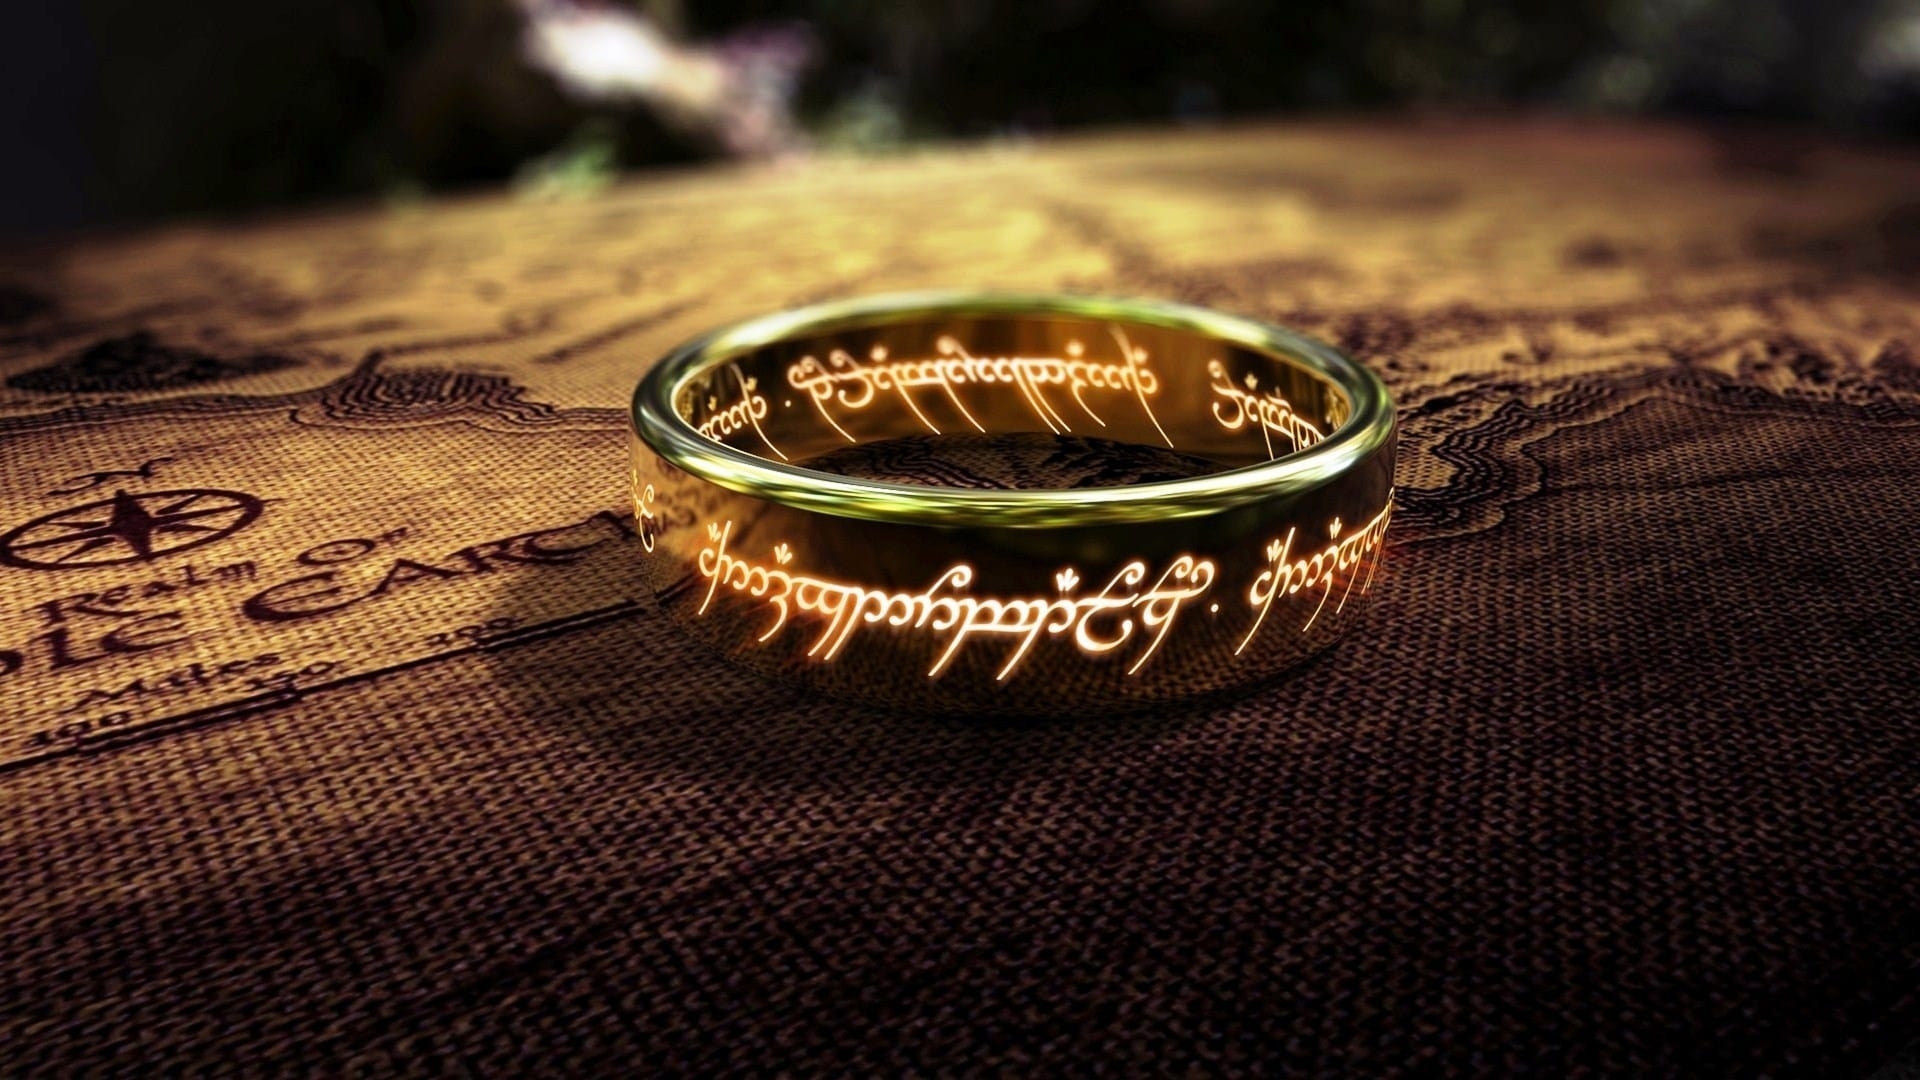 Володар перснів: Хранителі Персня (The Lord of the Rings: The Fellowship of the Ring)